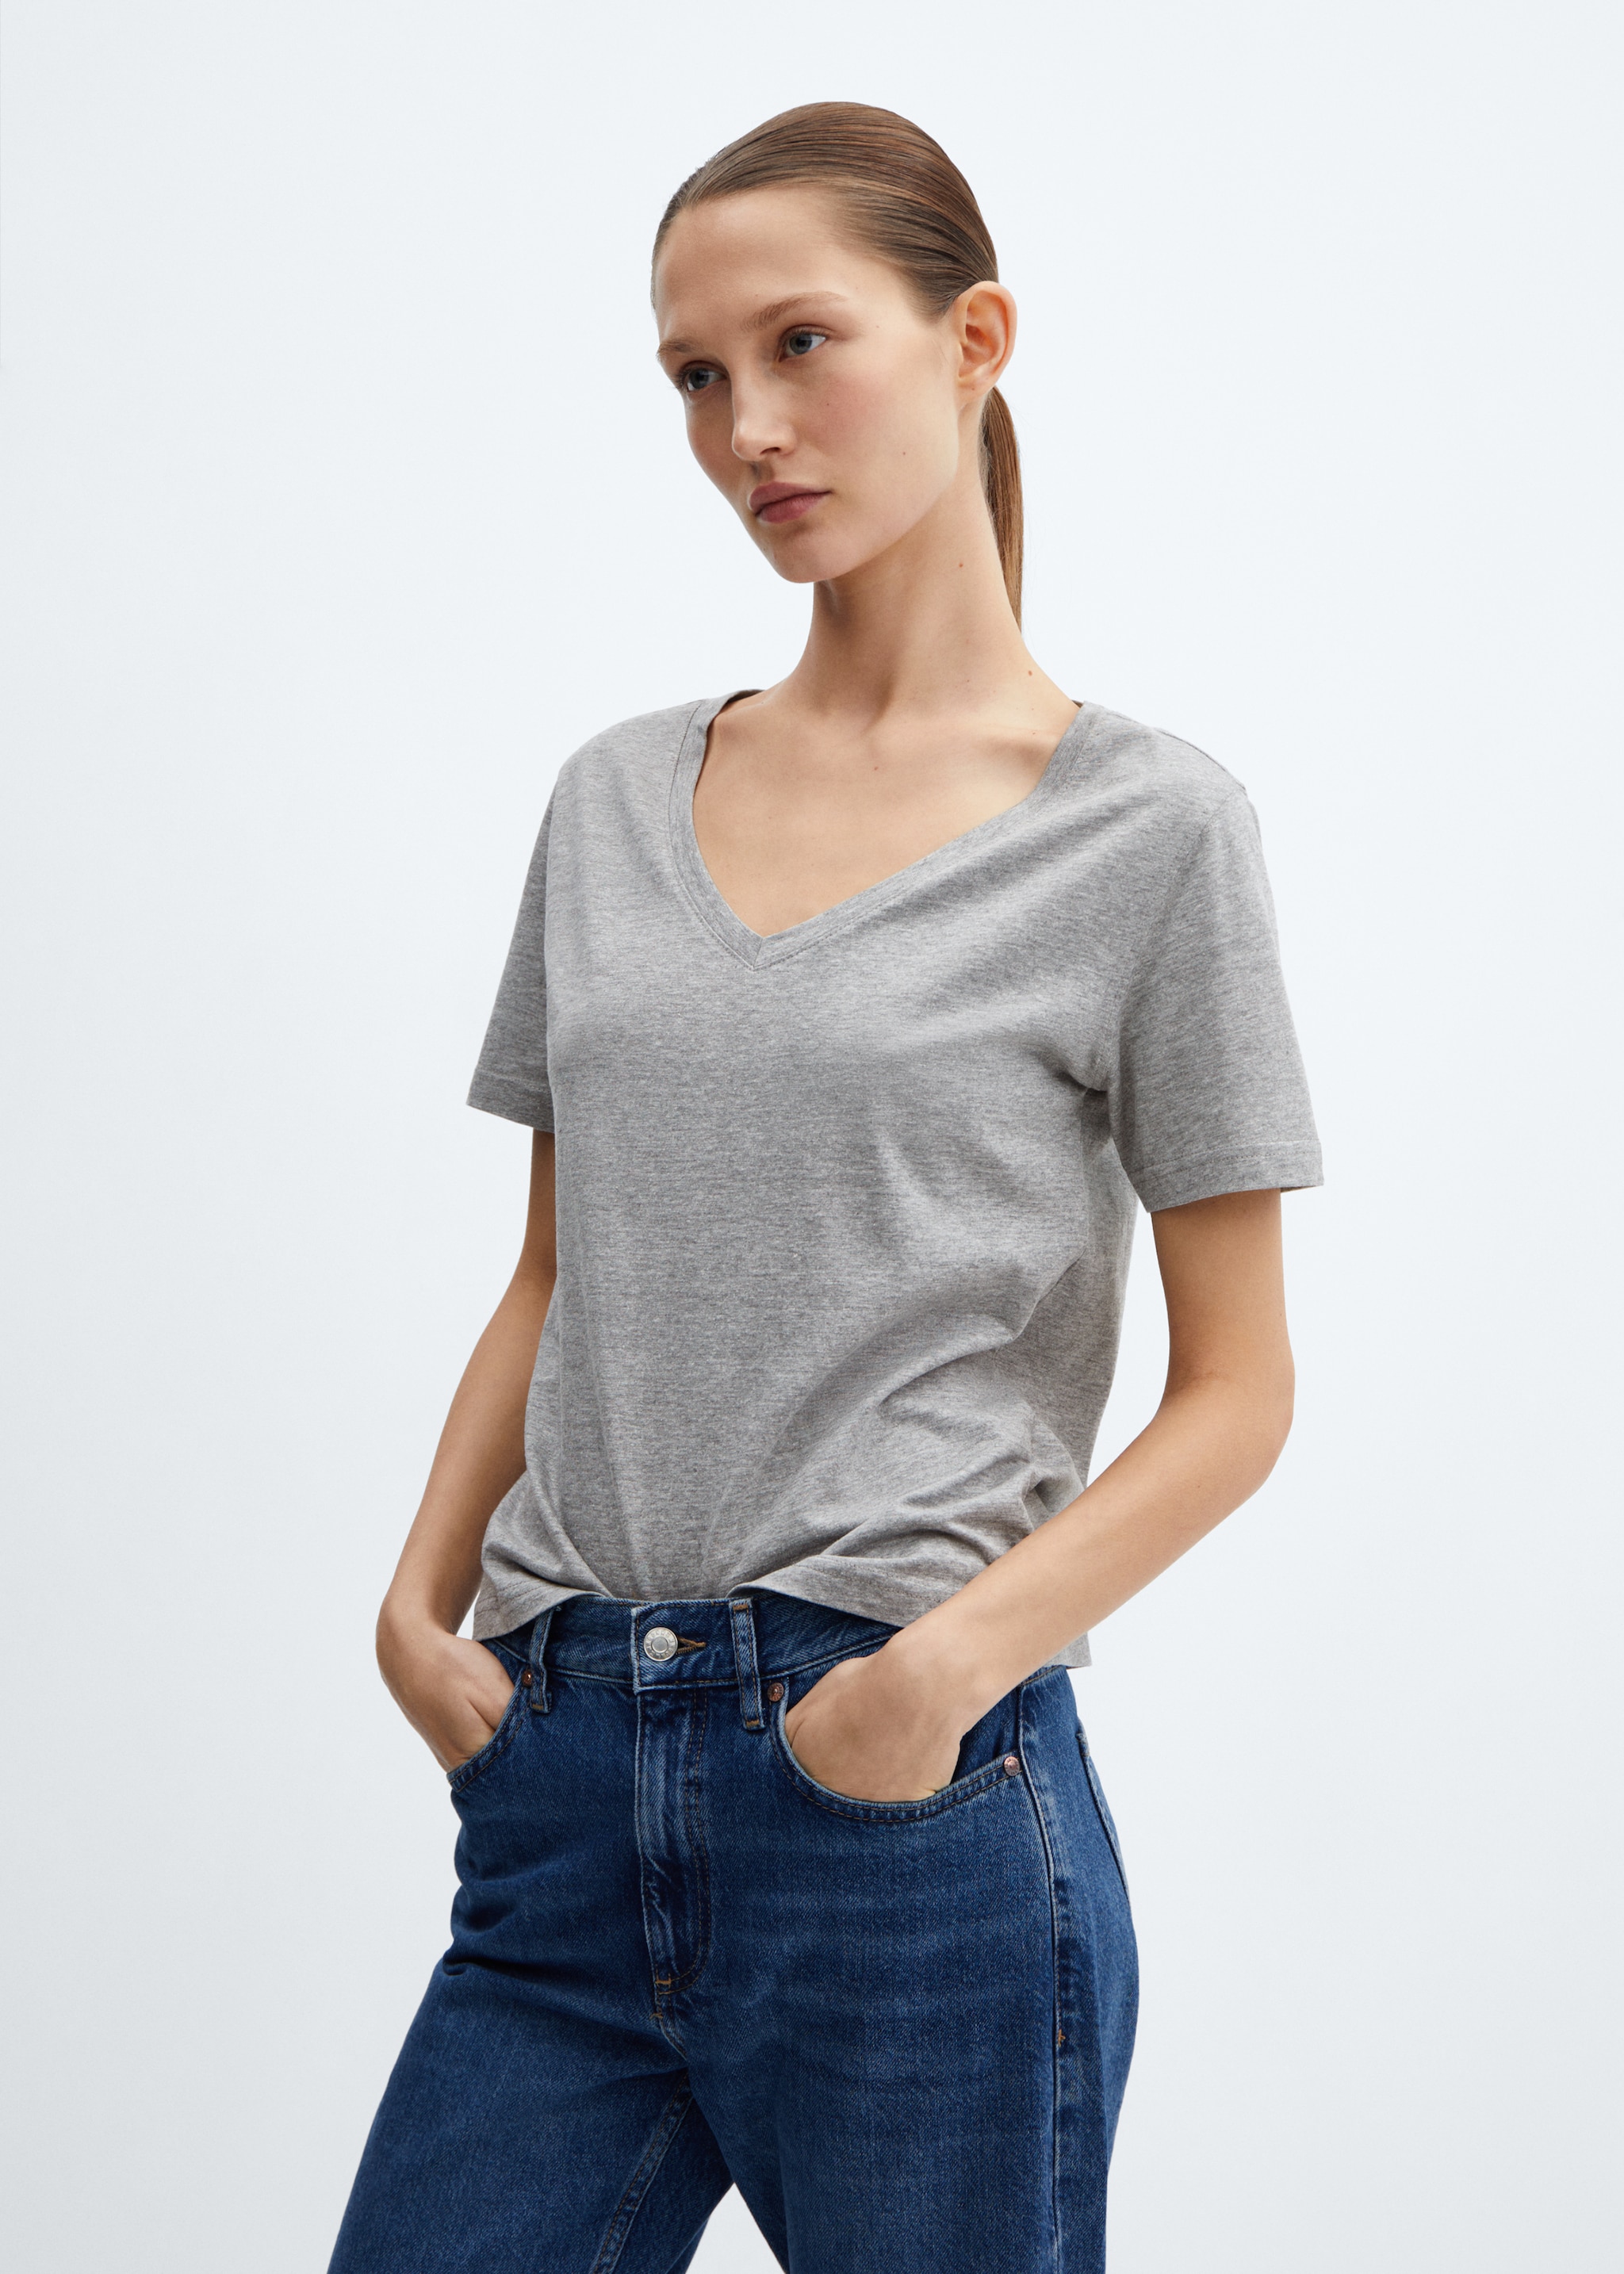 100% cotton V-neck t-shirt  - Medium plane